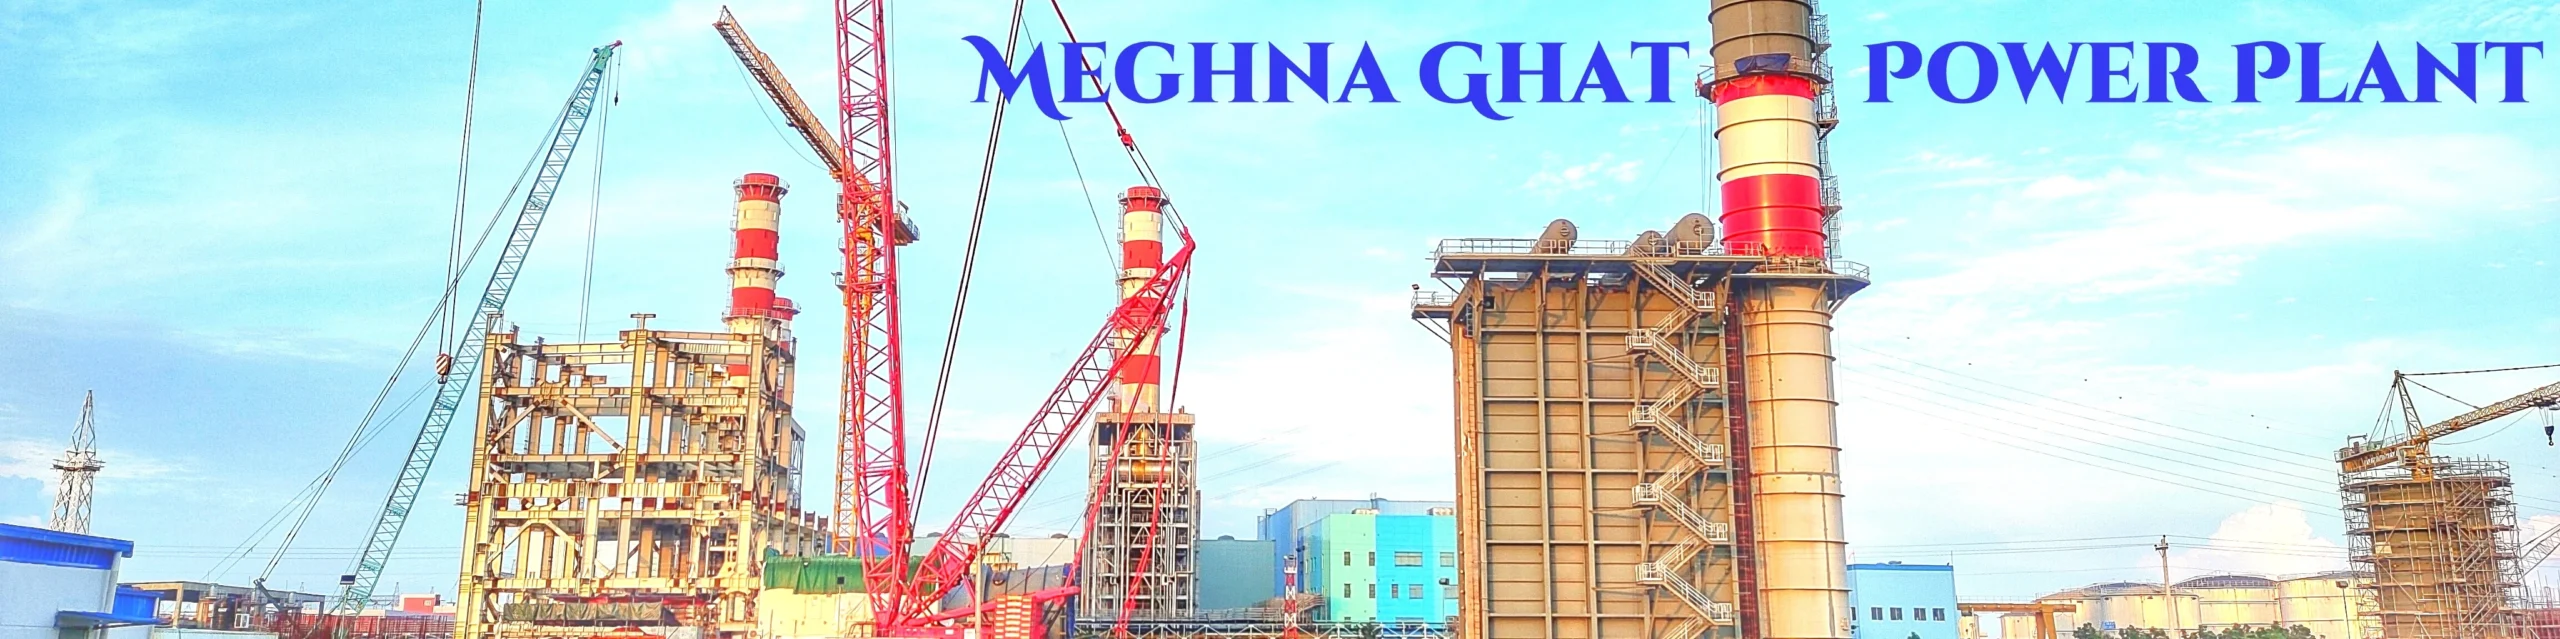 Meghna Ghat Power Plant (1)